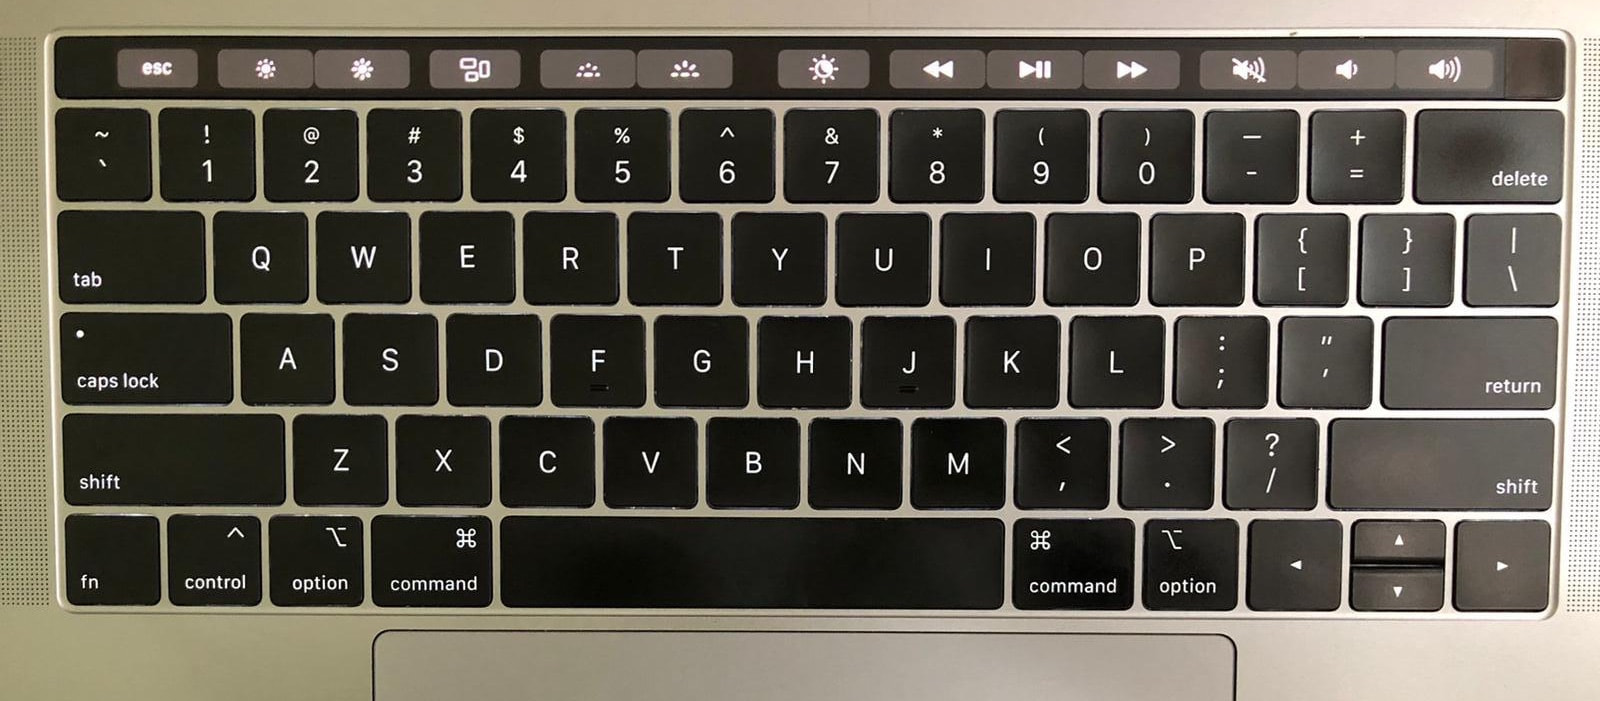 Mac keyboard.